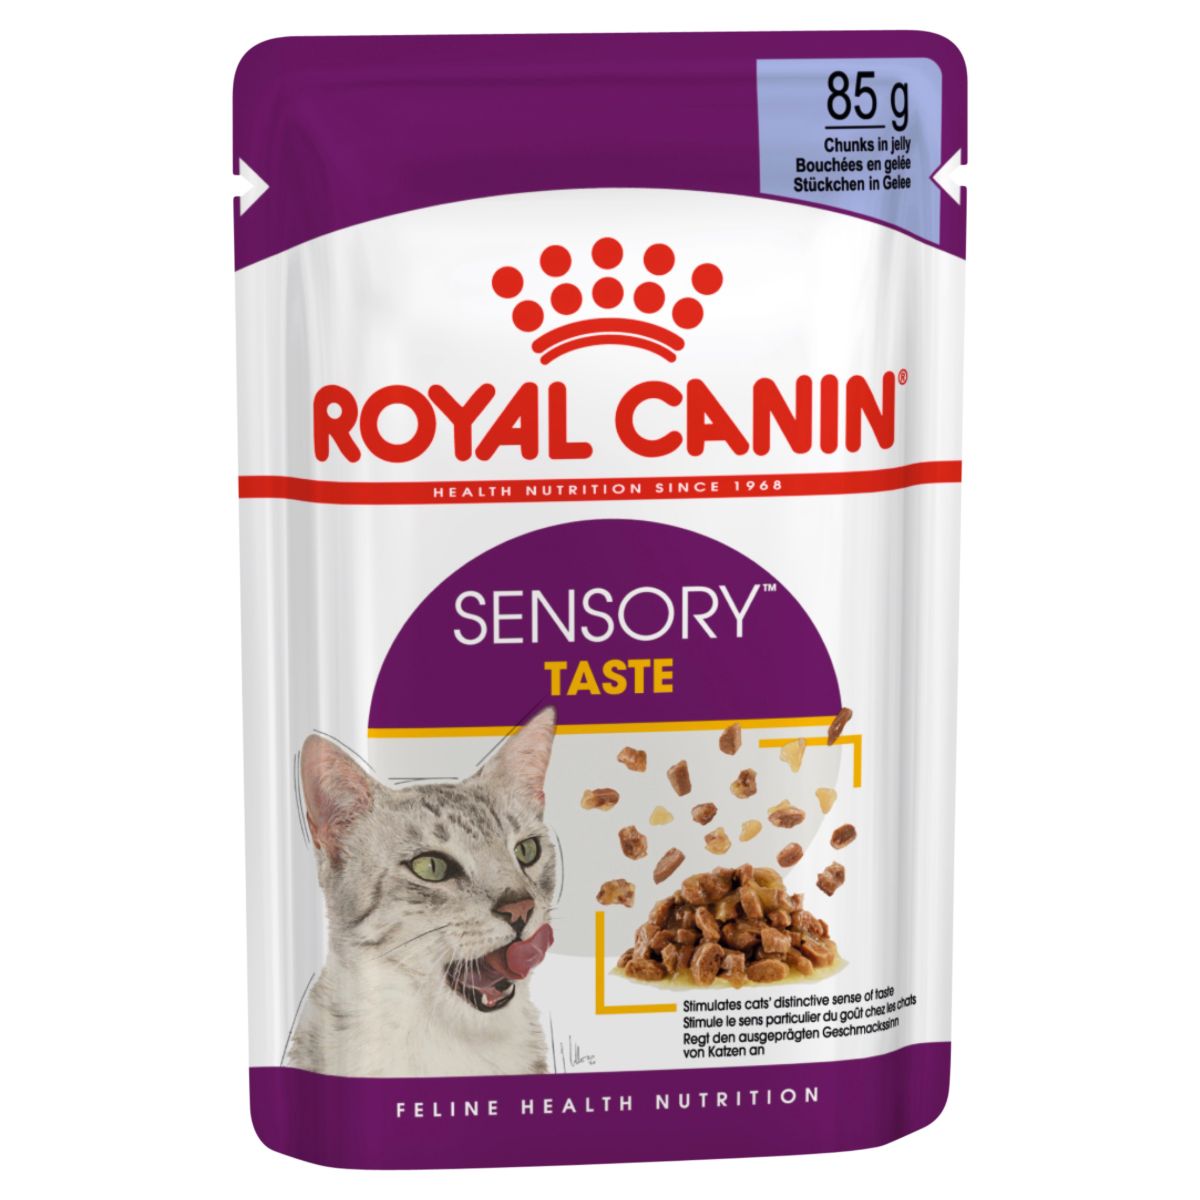 Royal Canin Sensory Taste Chunks in Jelly Wet Cat Food 85G